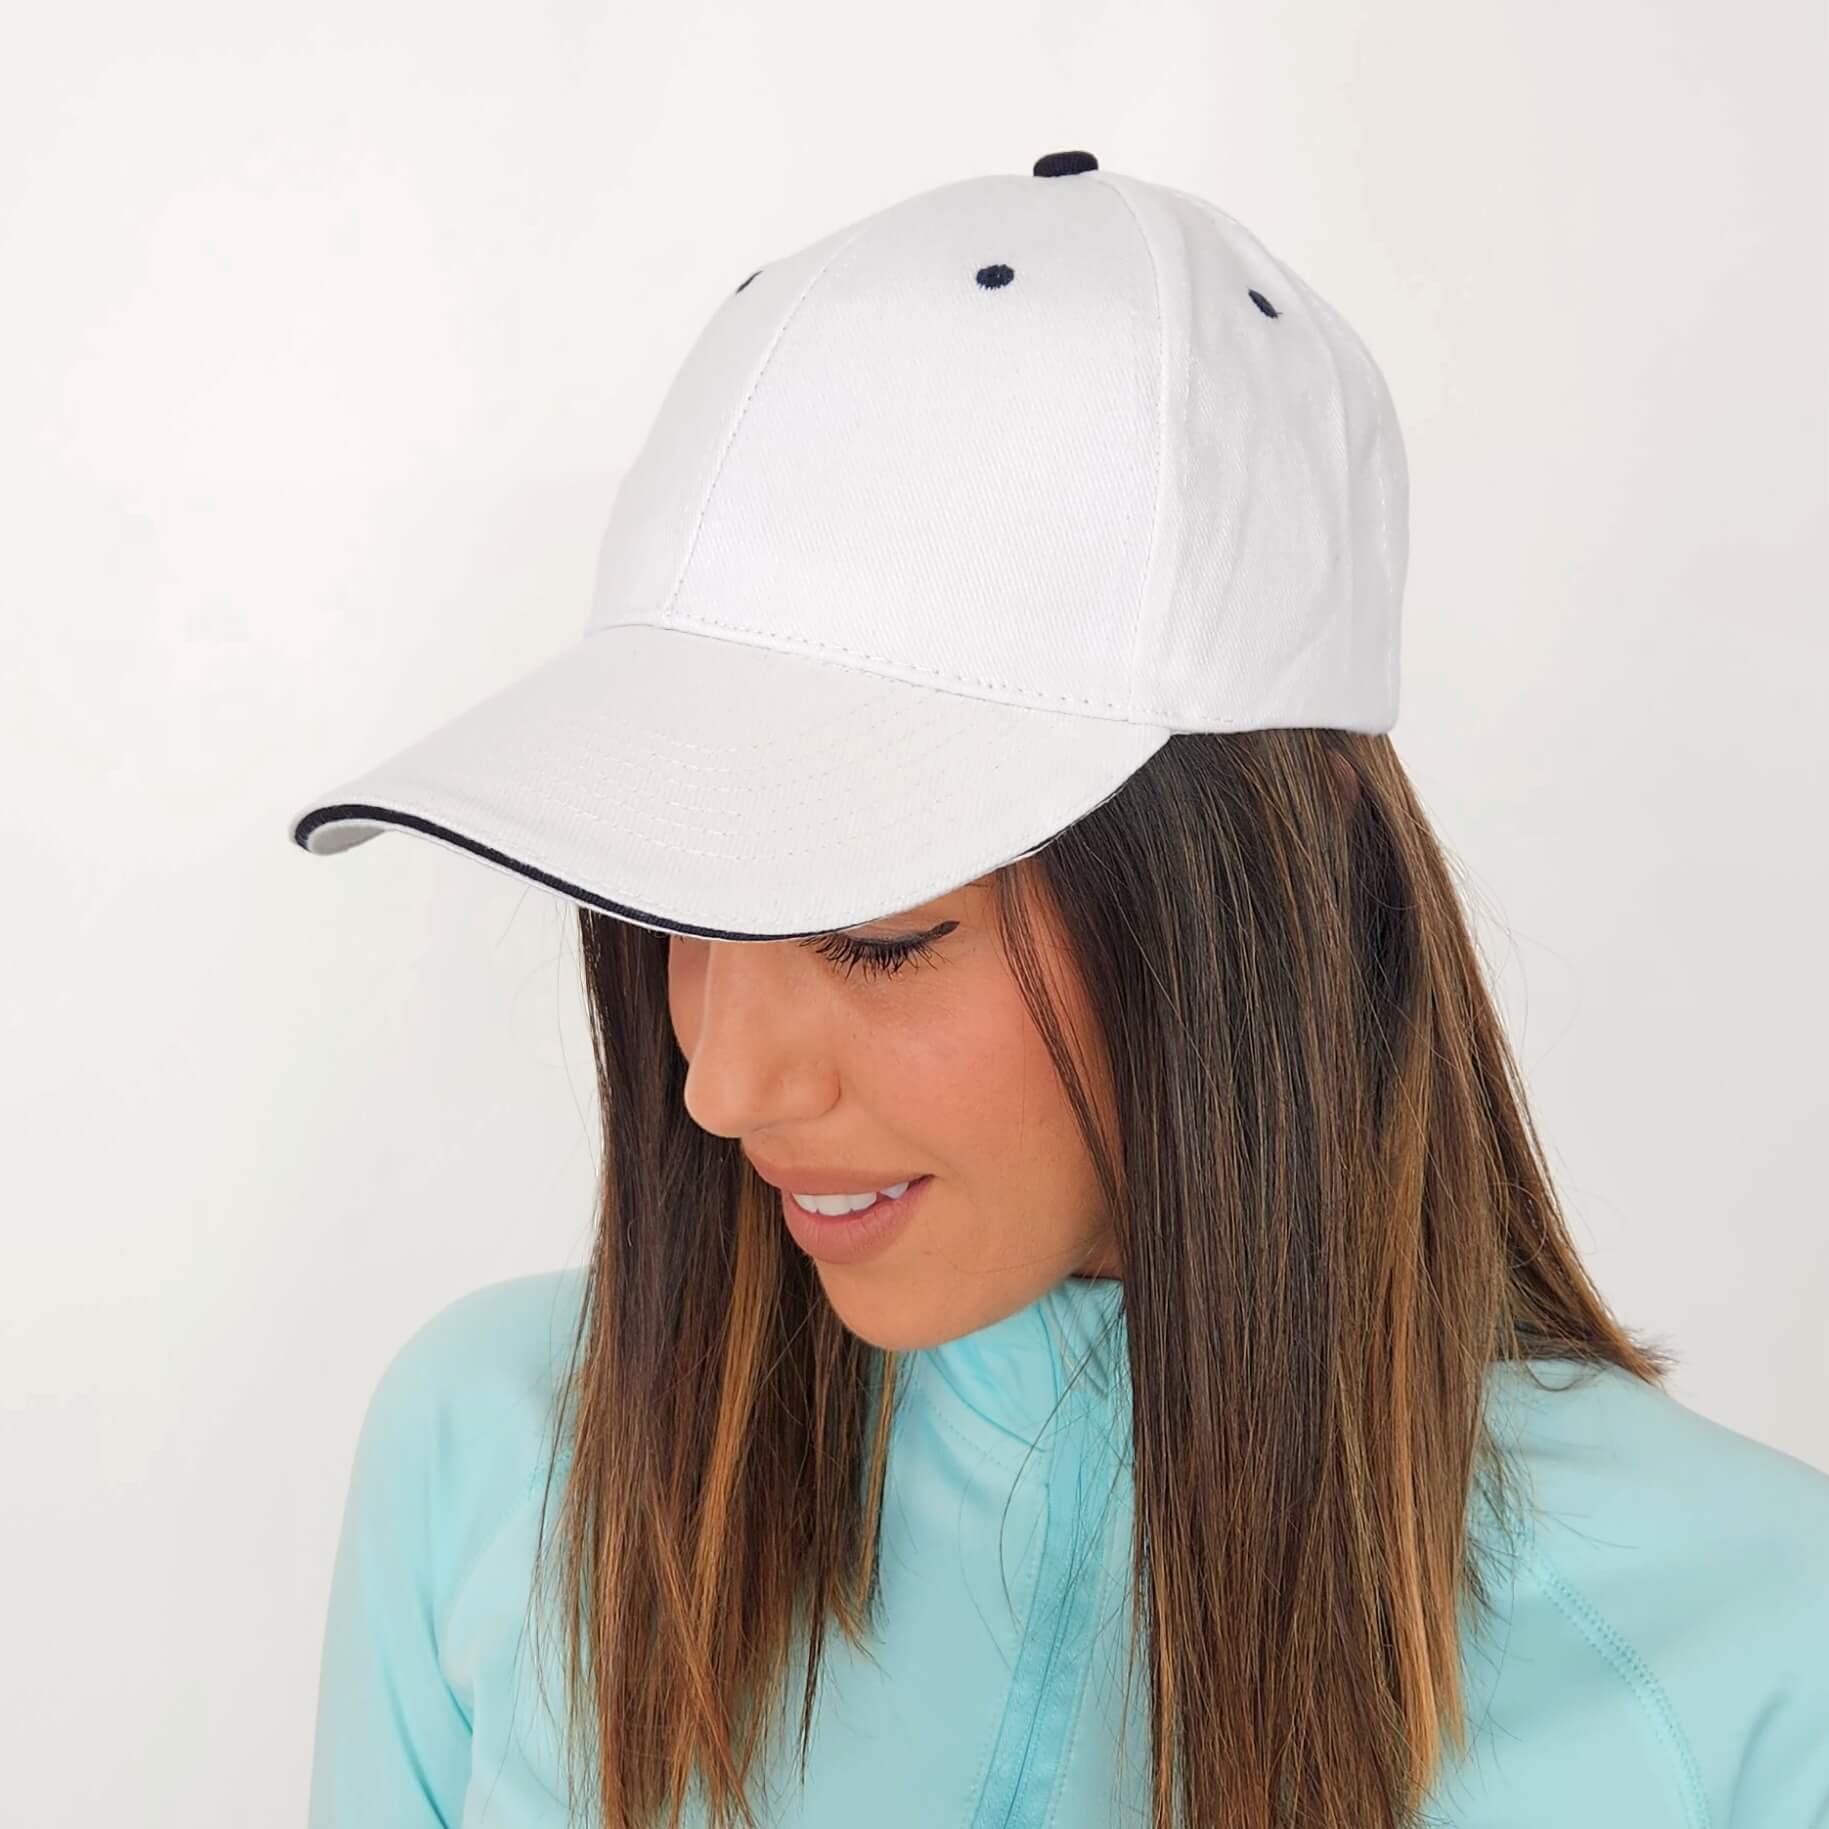 Gorra deportiva blanca